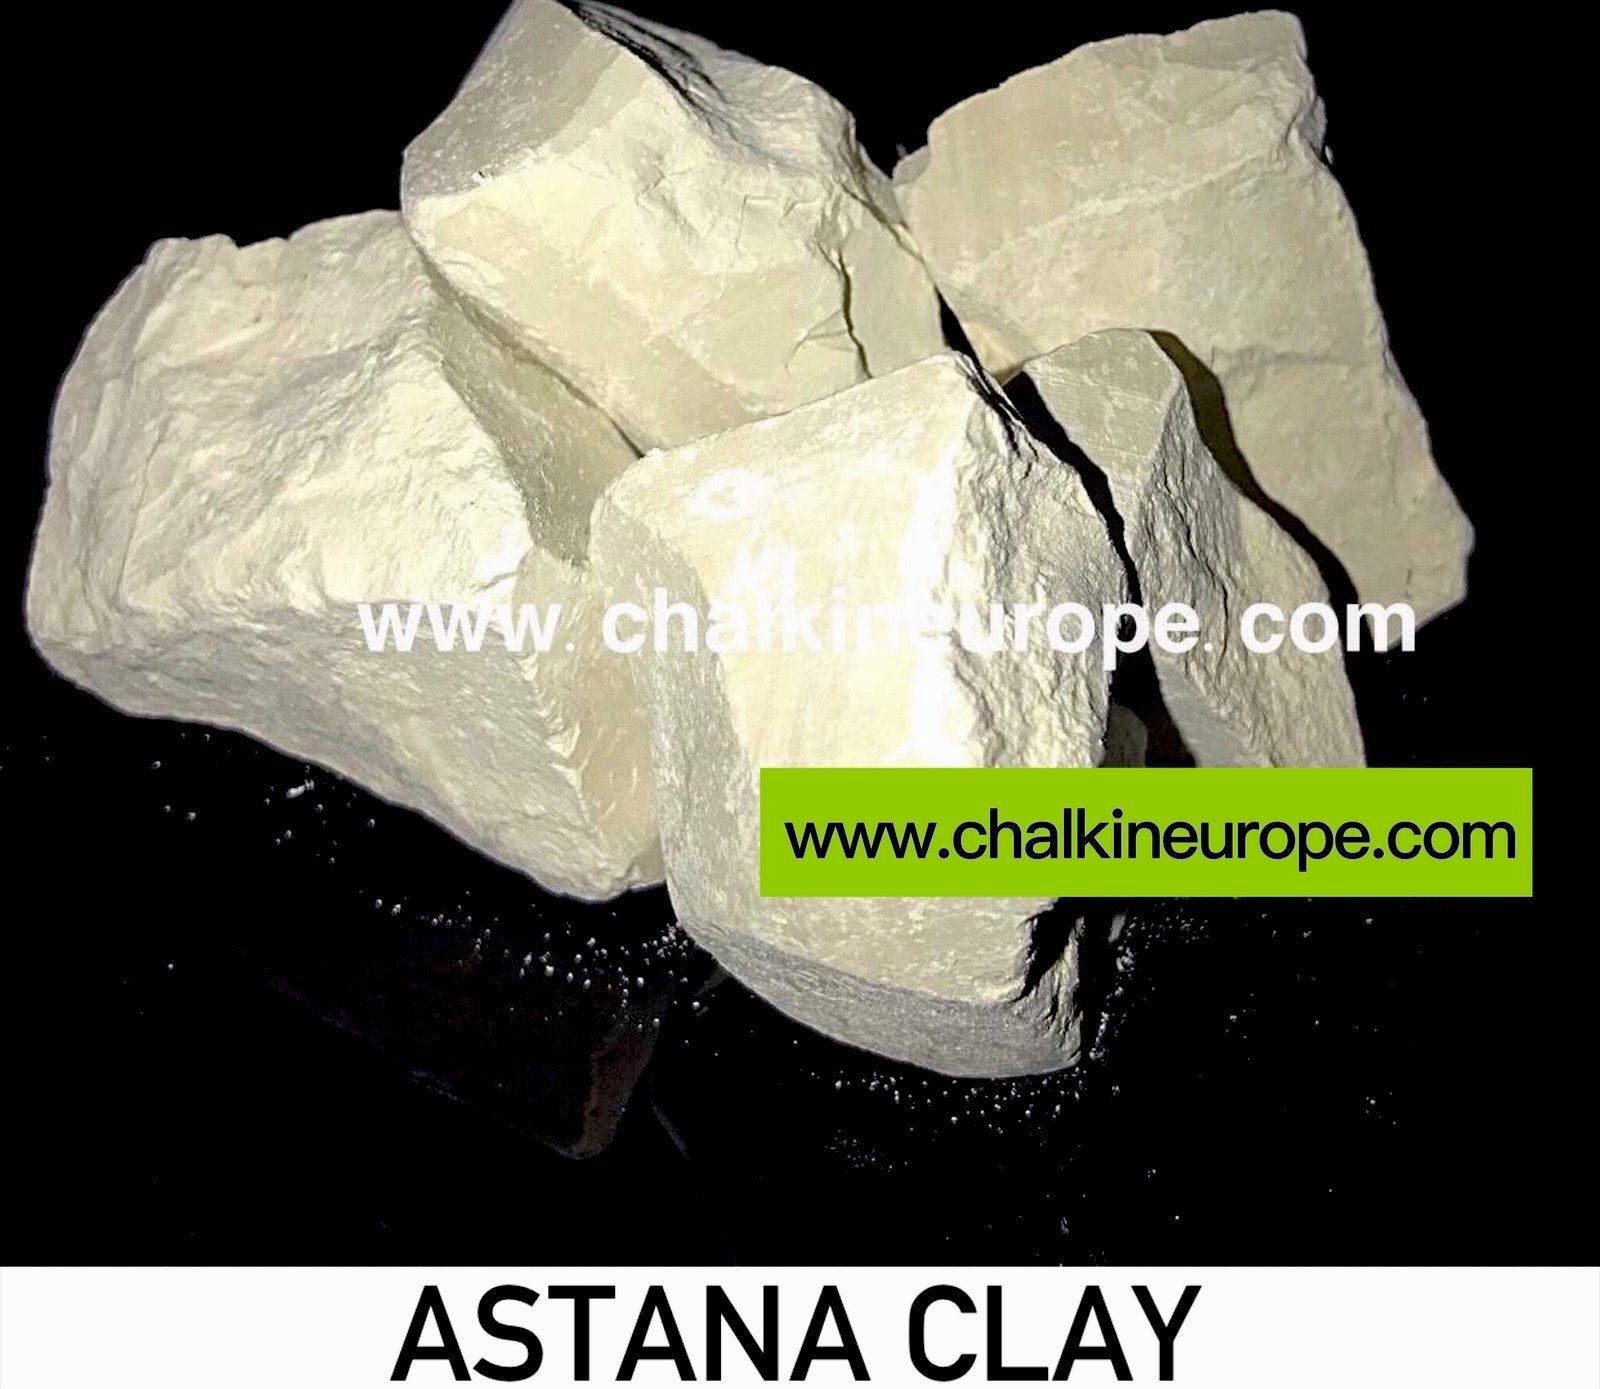 Astana Clay - Chalkineurope